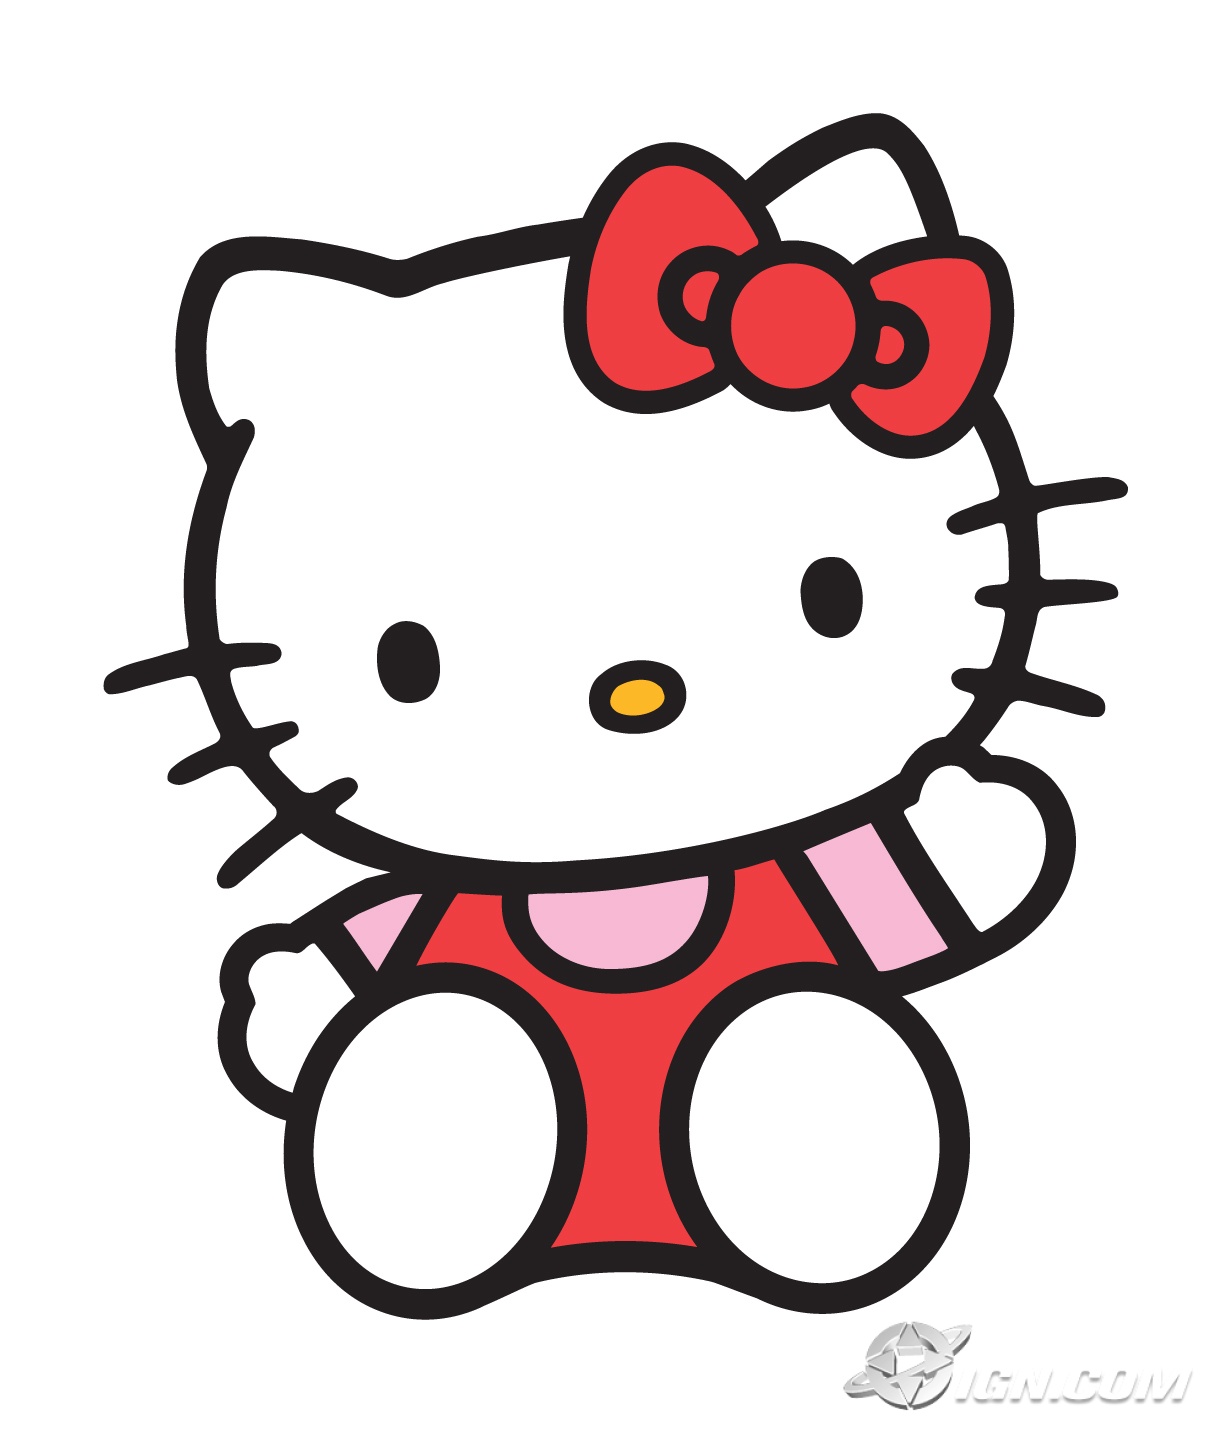 Kumpulan Gambar Kartun Hello Kitty Lucu Background Wallpaper